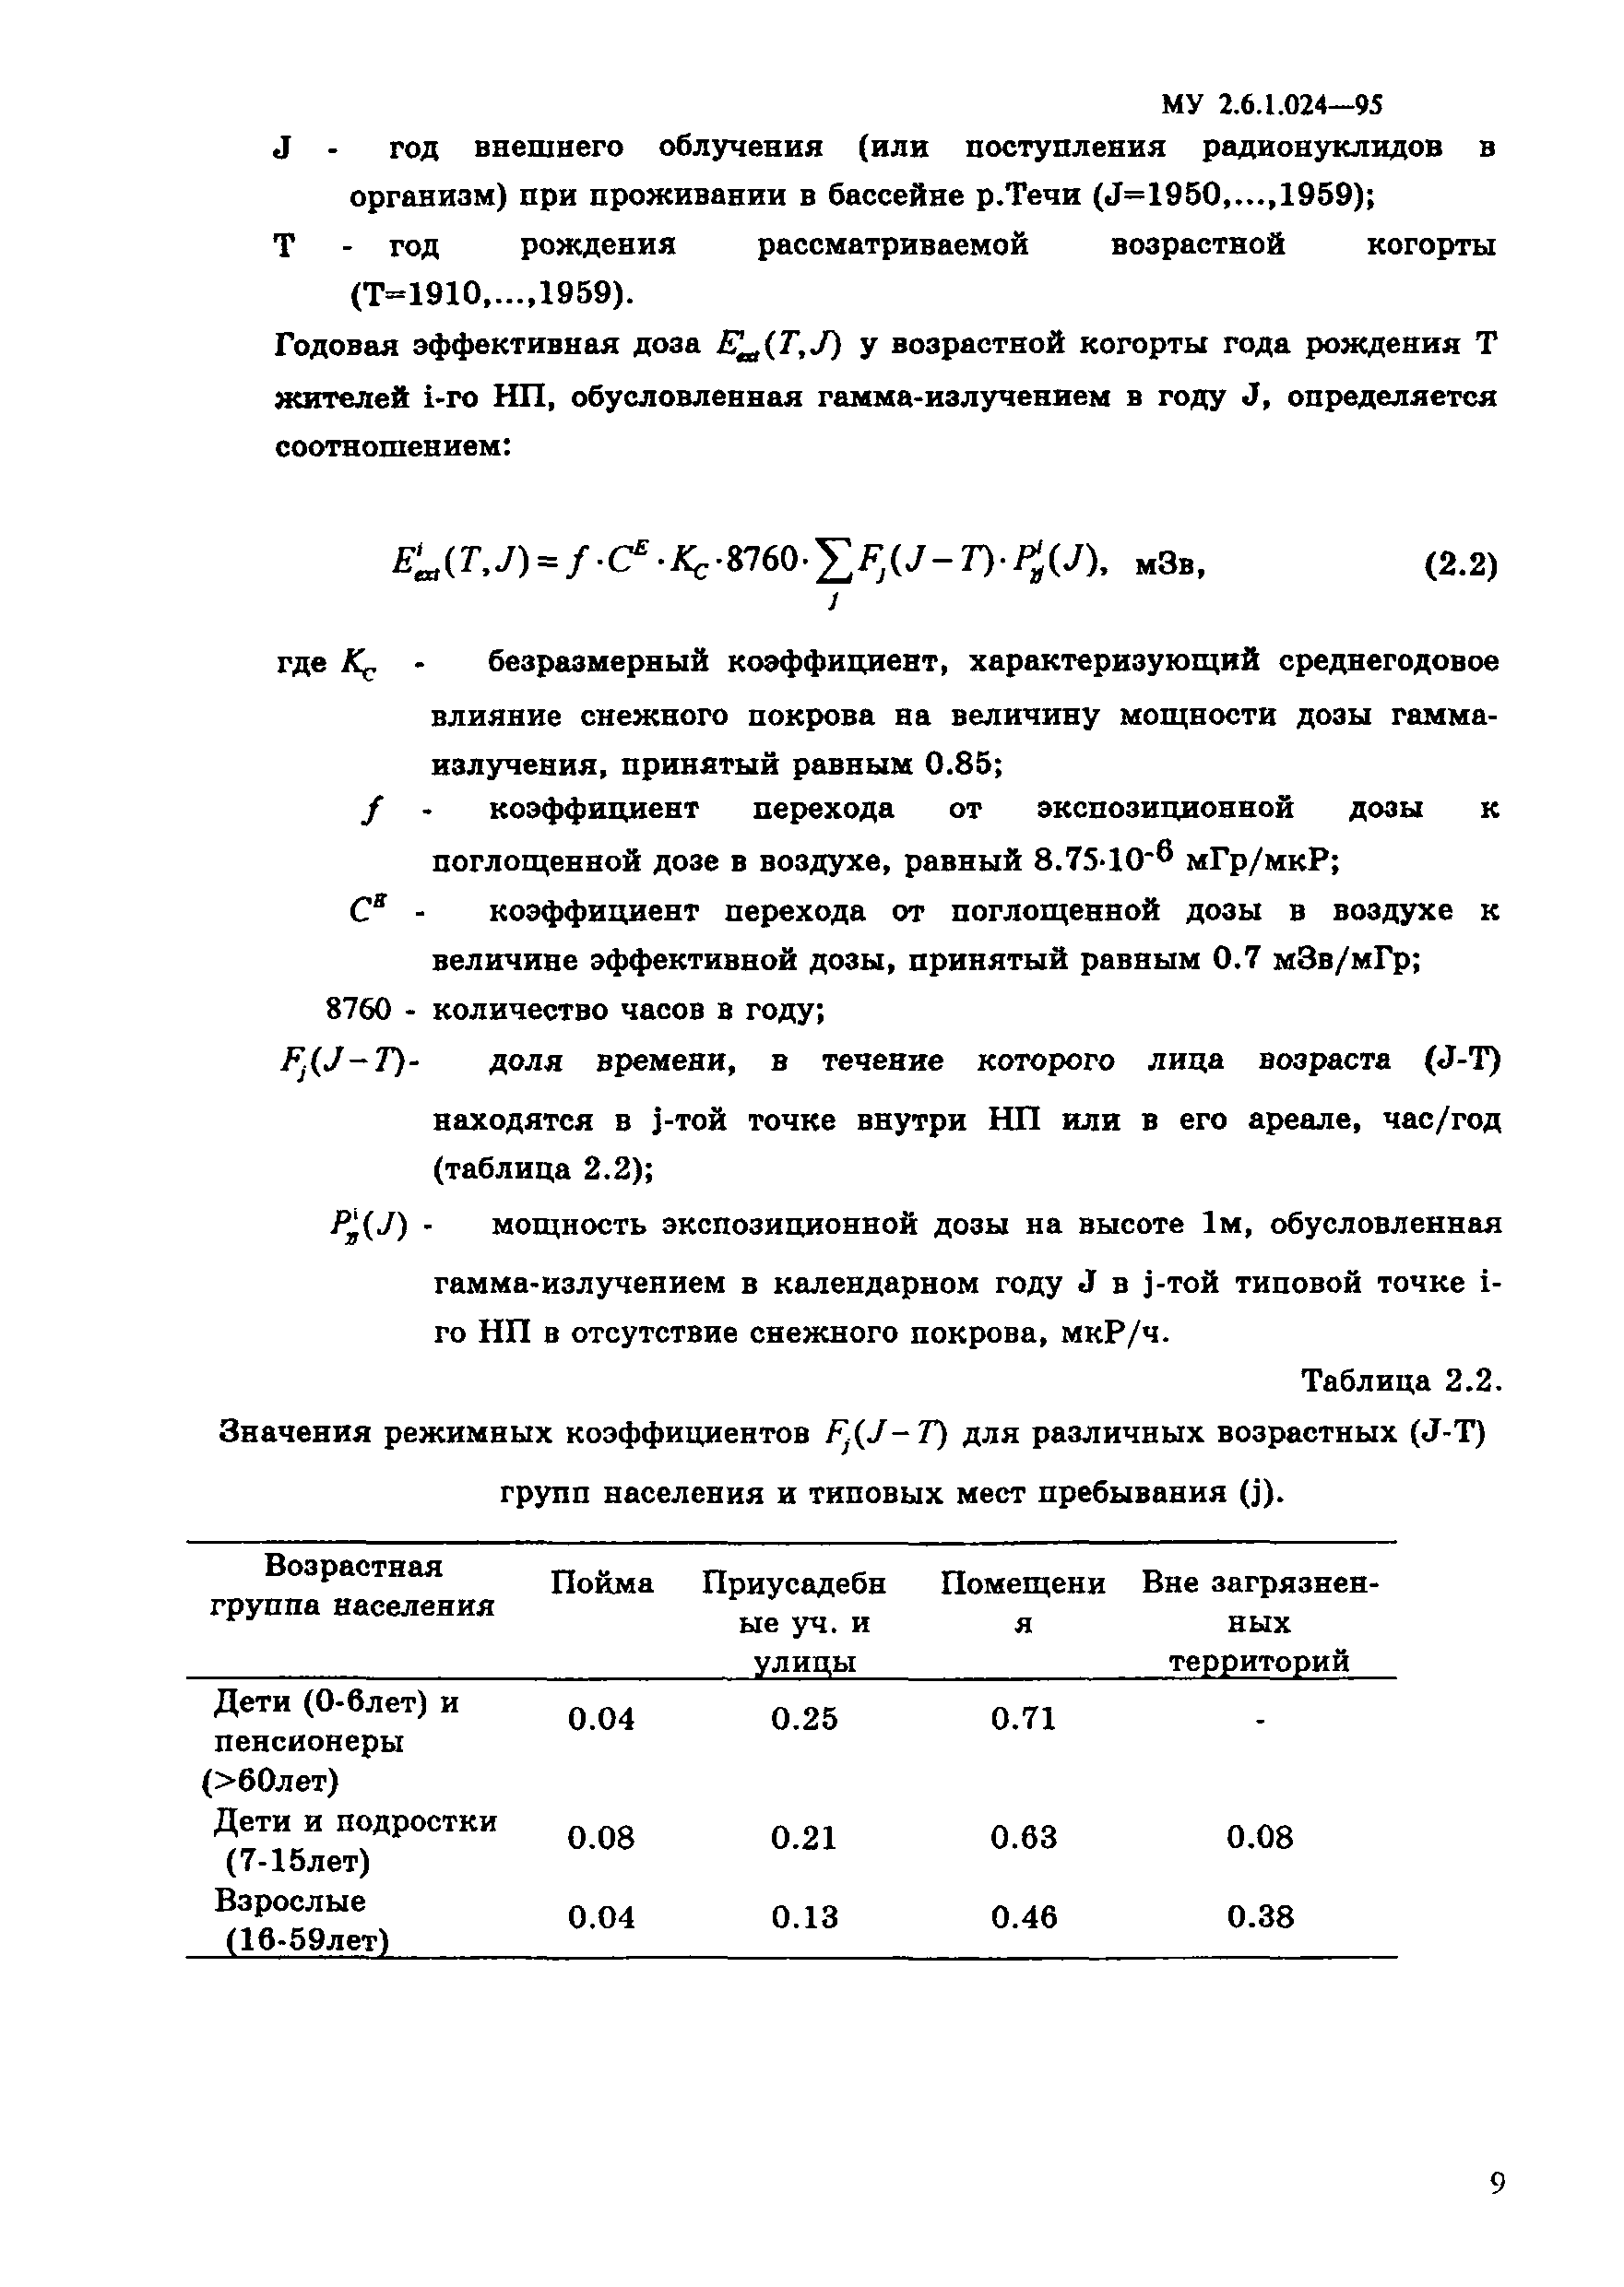 МУ 2.6.1.024-95